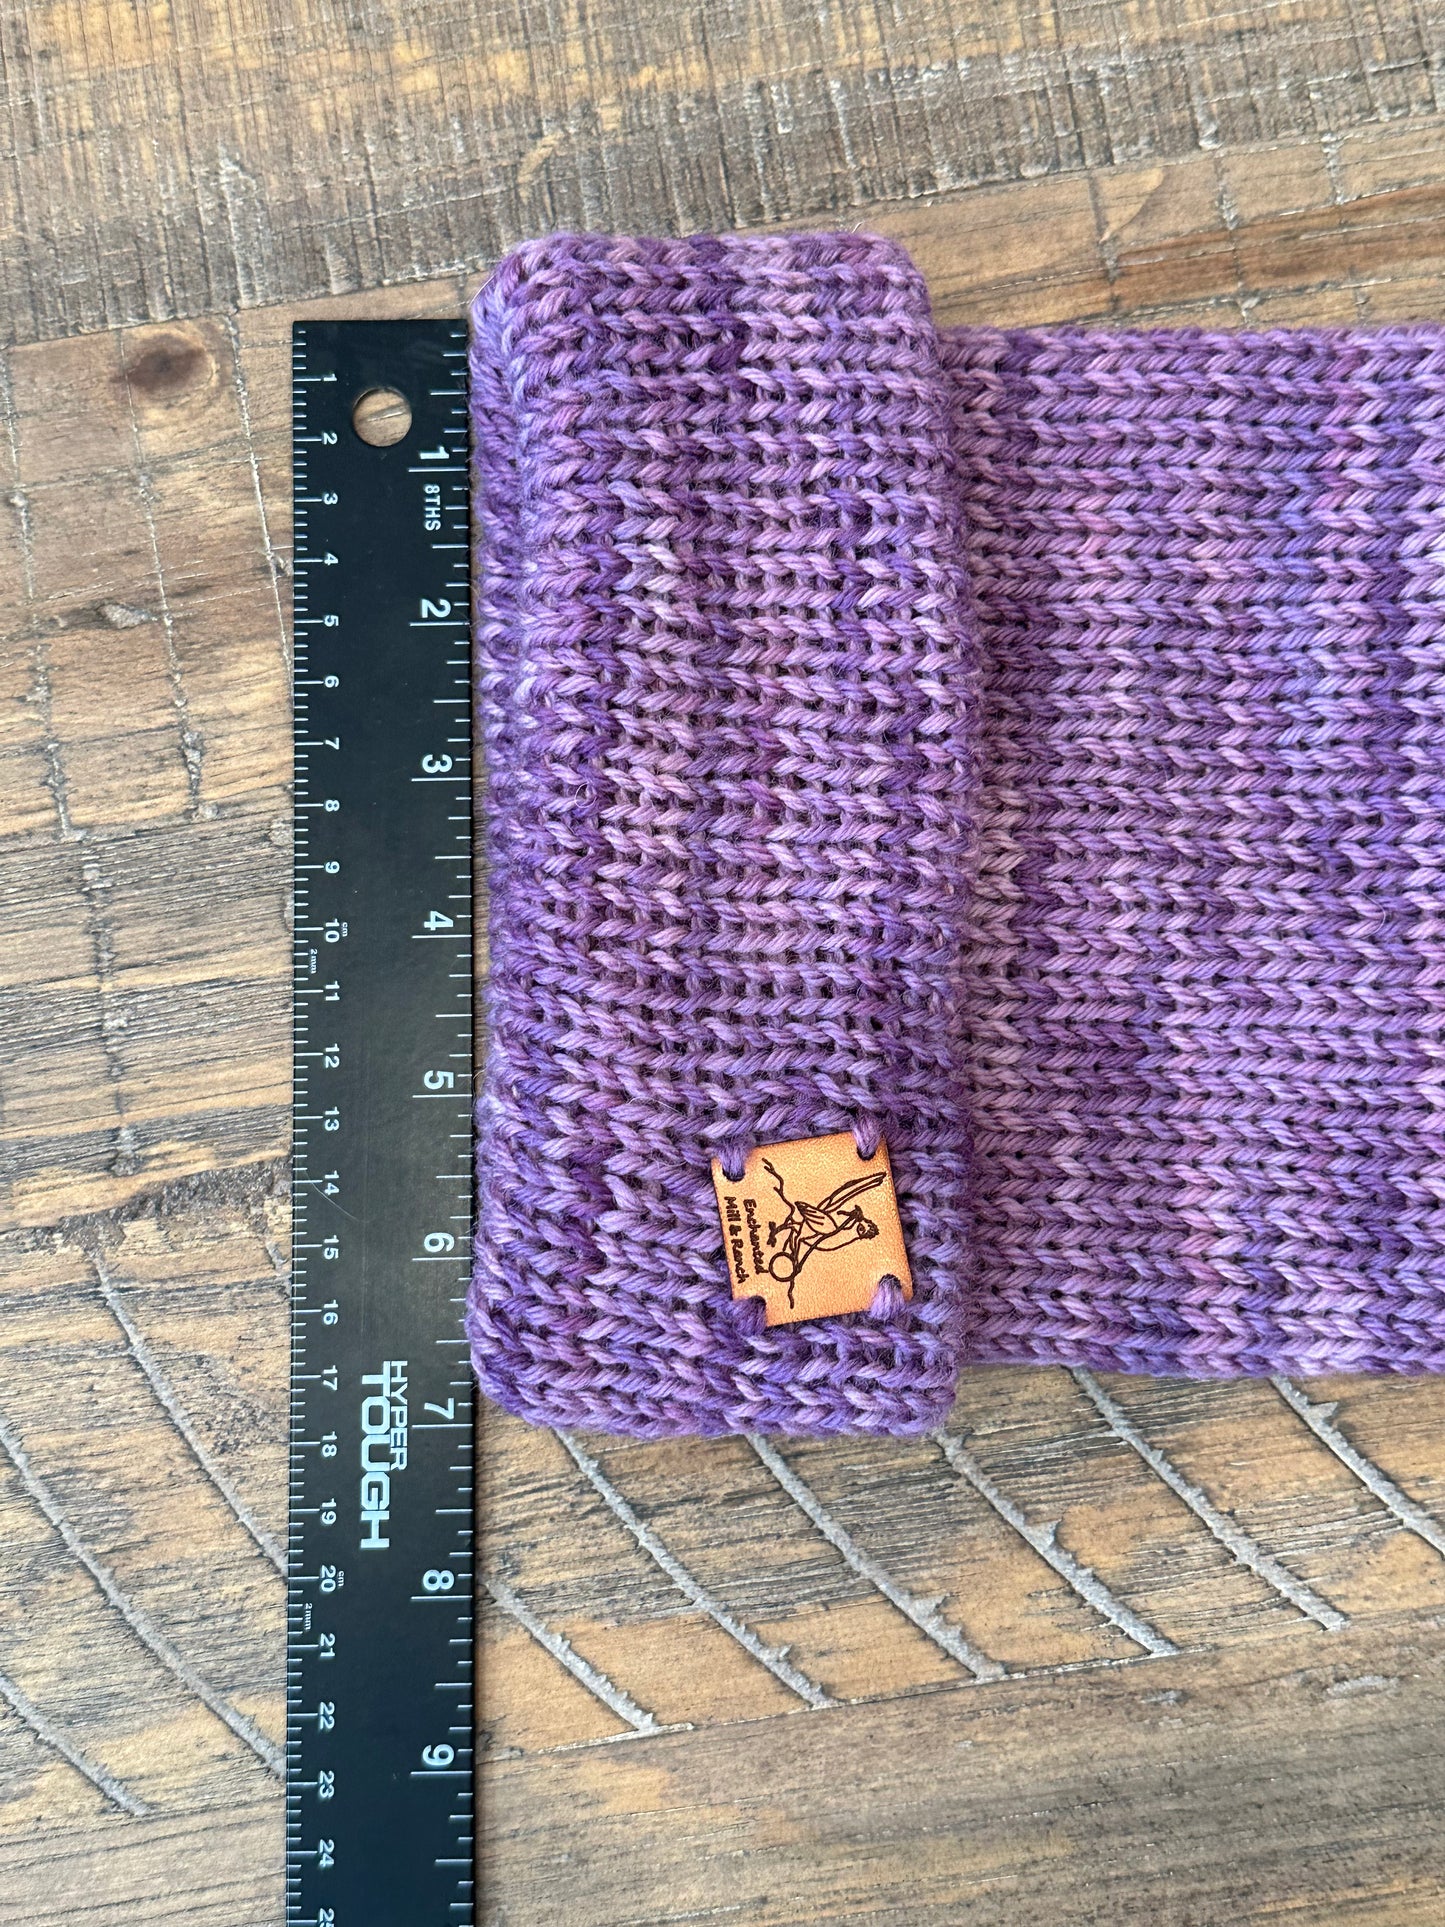 Hat-purple (2)